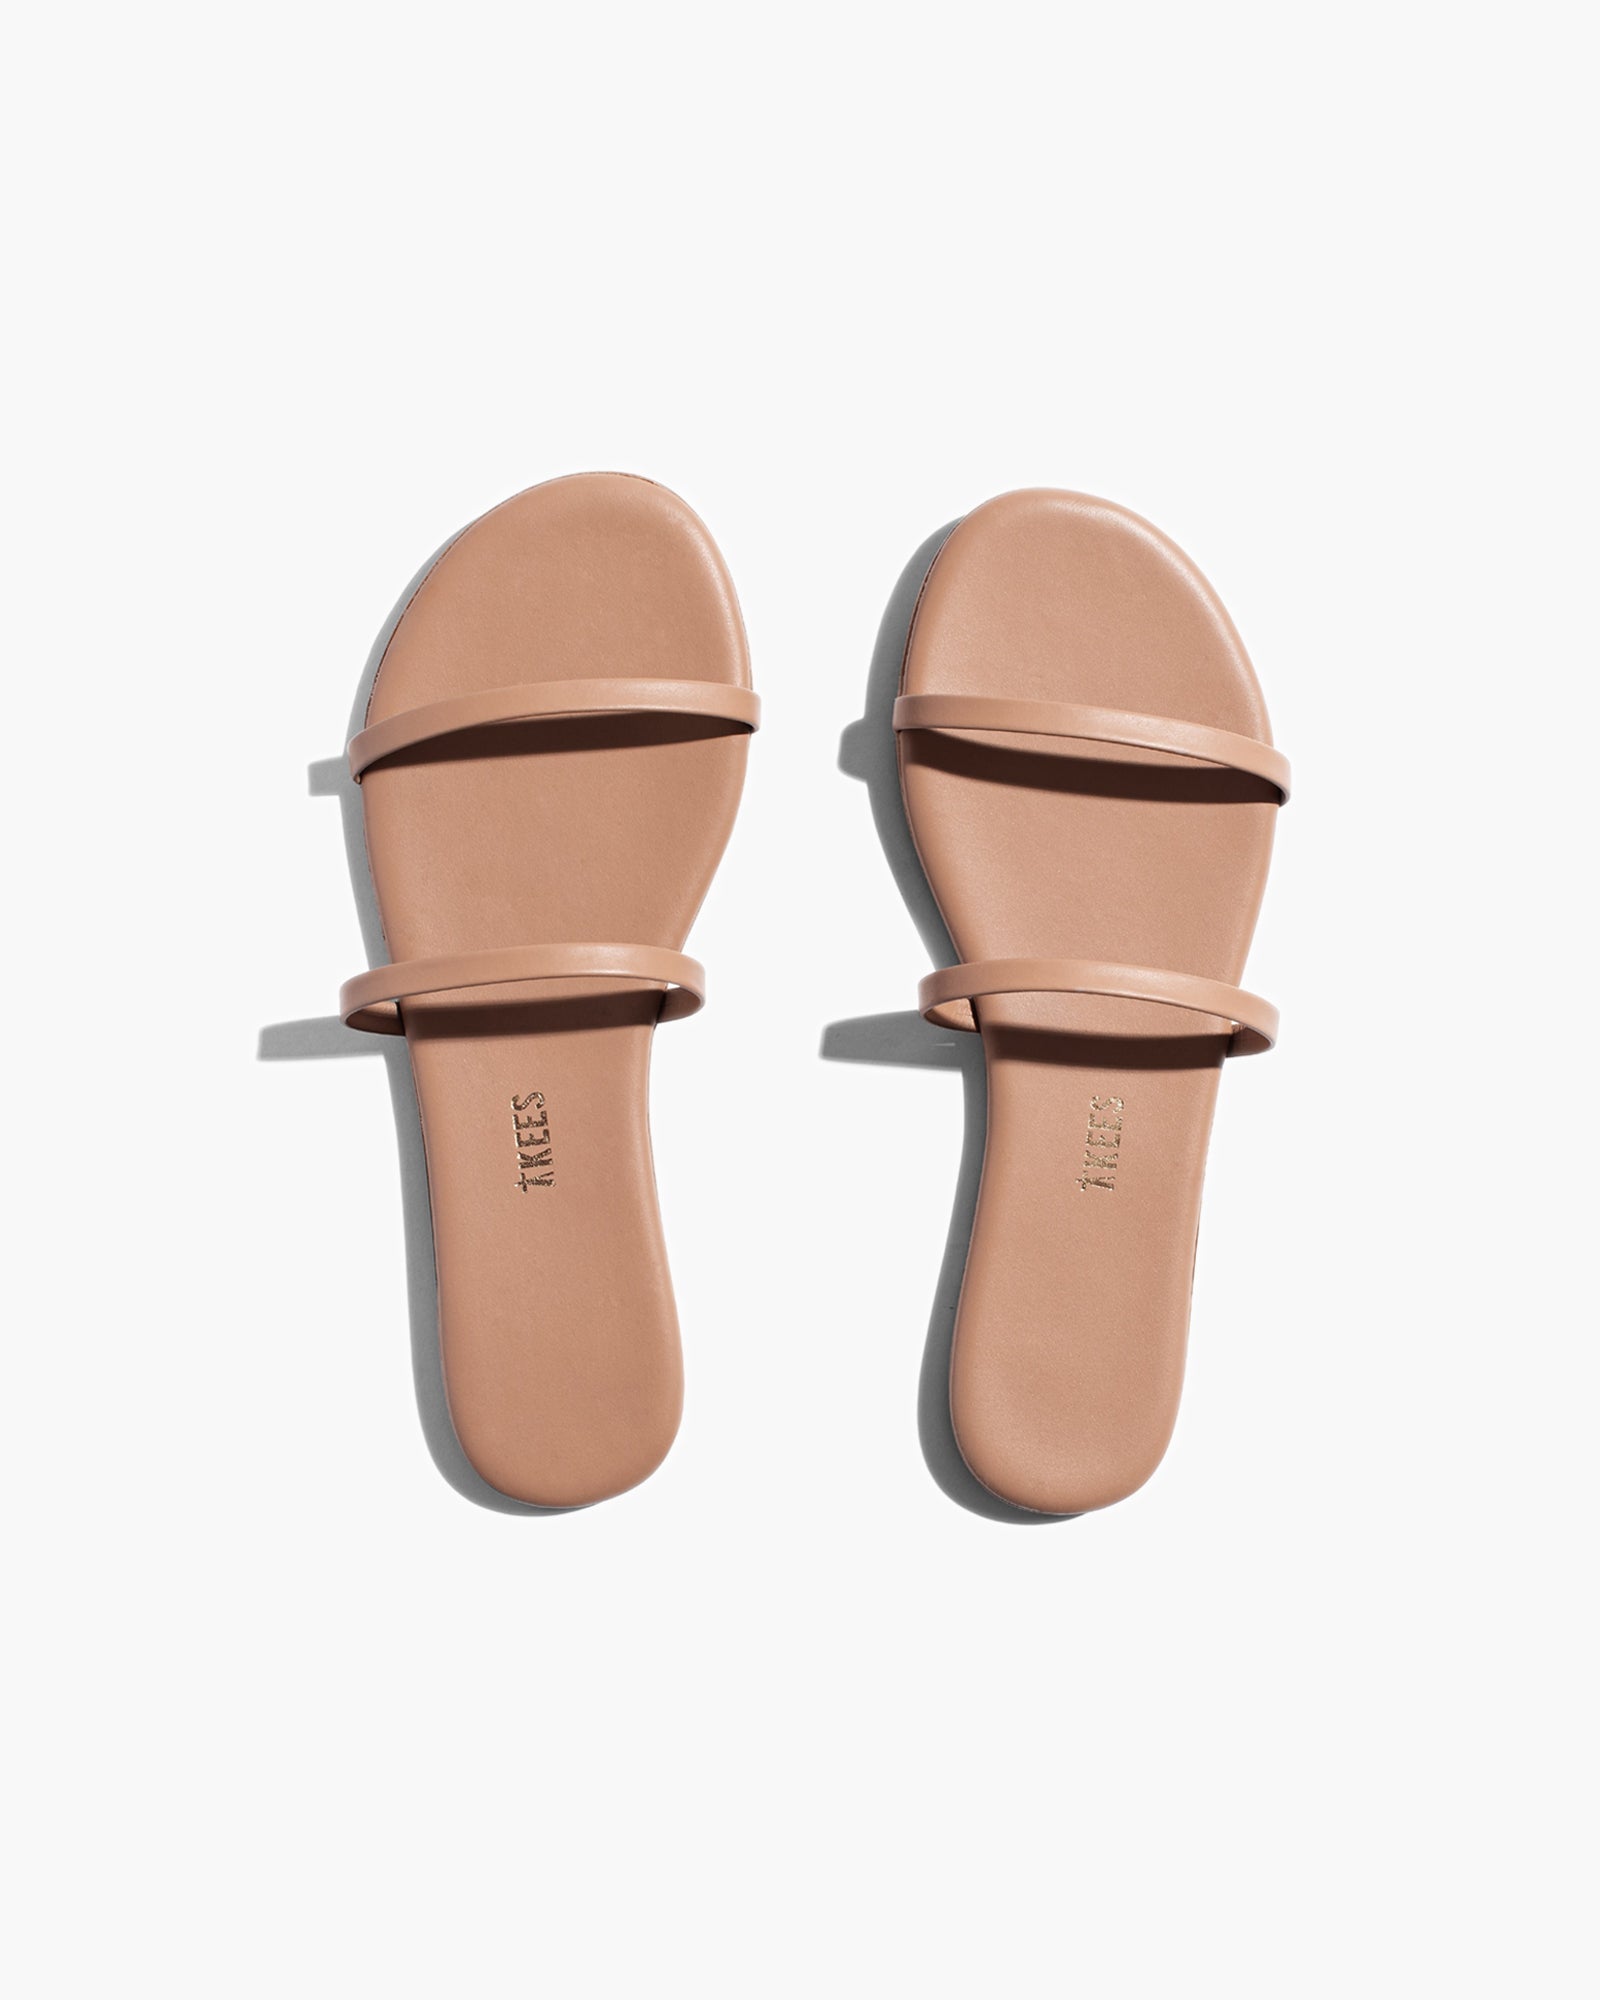 TKEES Gemma Women's Sandals Rose Gold | HFA902518